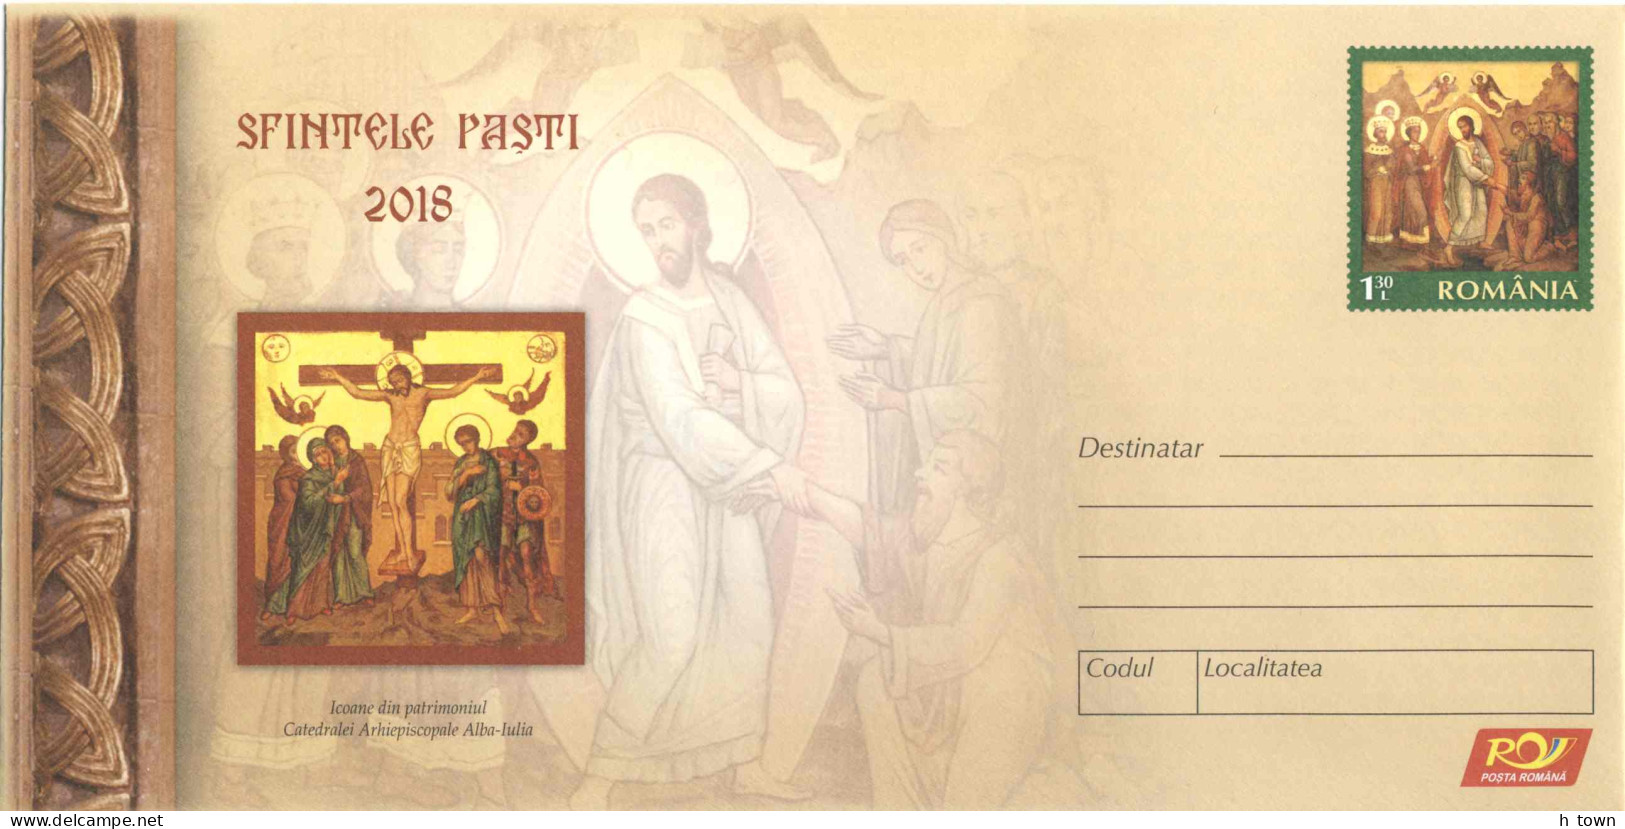 824  Icône, Pâques: PAP 2018  - Icon Of The Eastern Orthodox Church: Postal Stationery Cover - Quadri